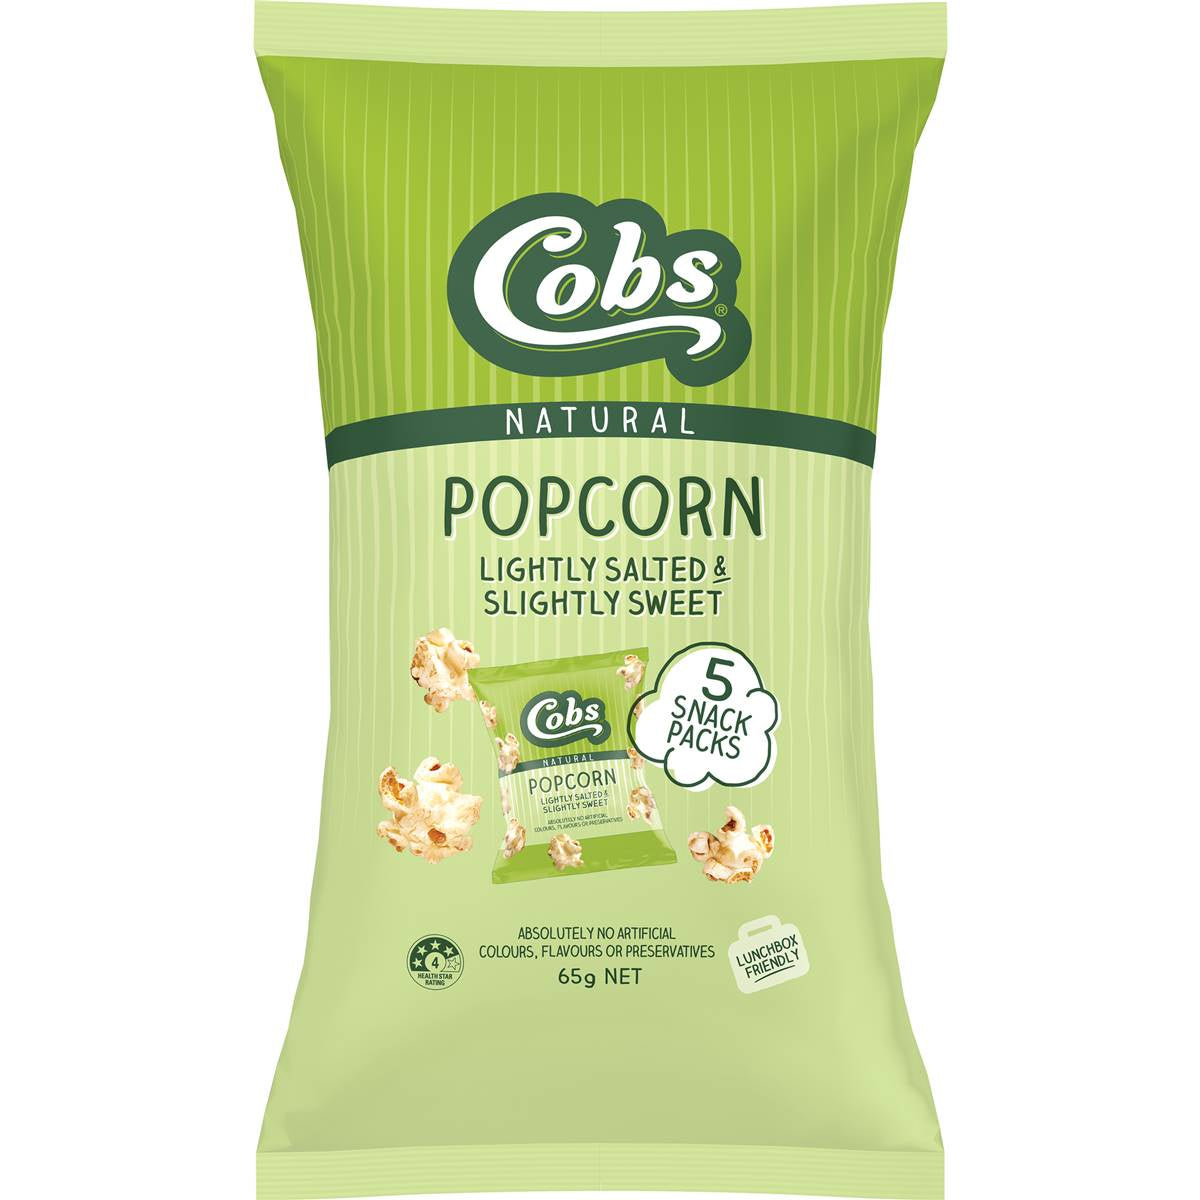 Cobs Natural Popcorn Lightly Salted Slightly Sweet 5pk